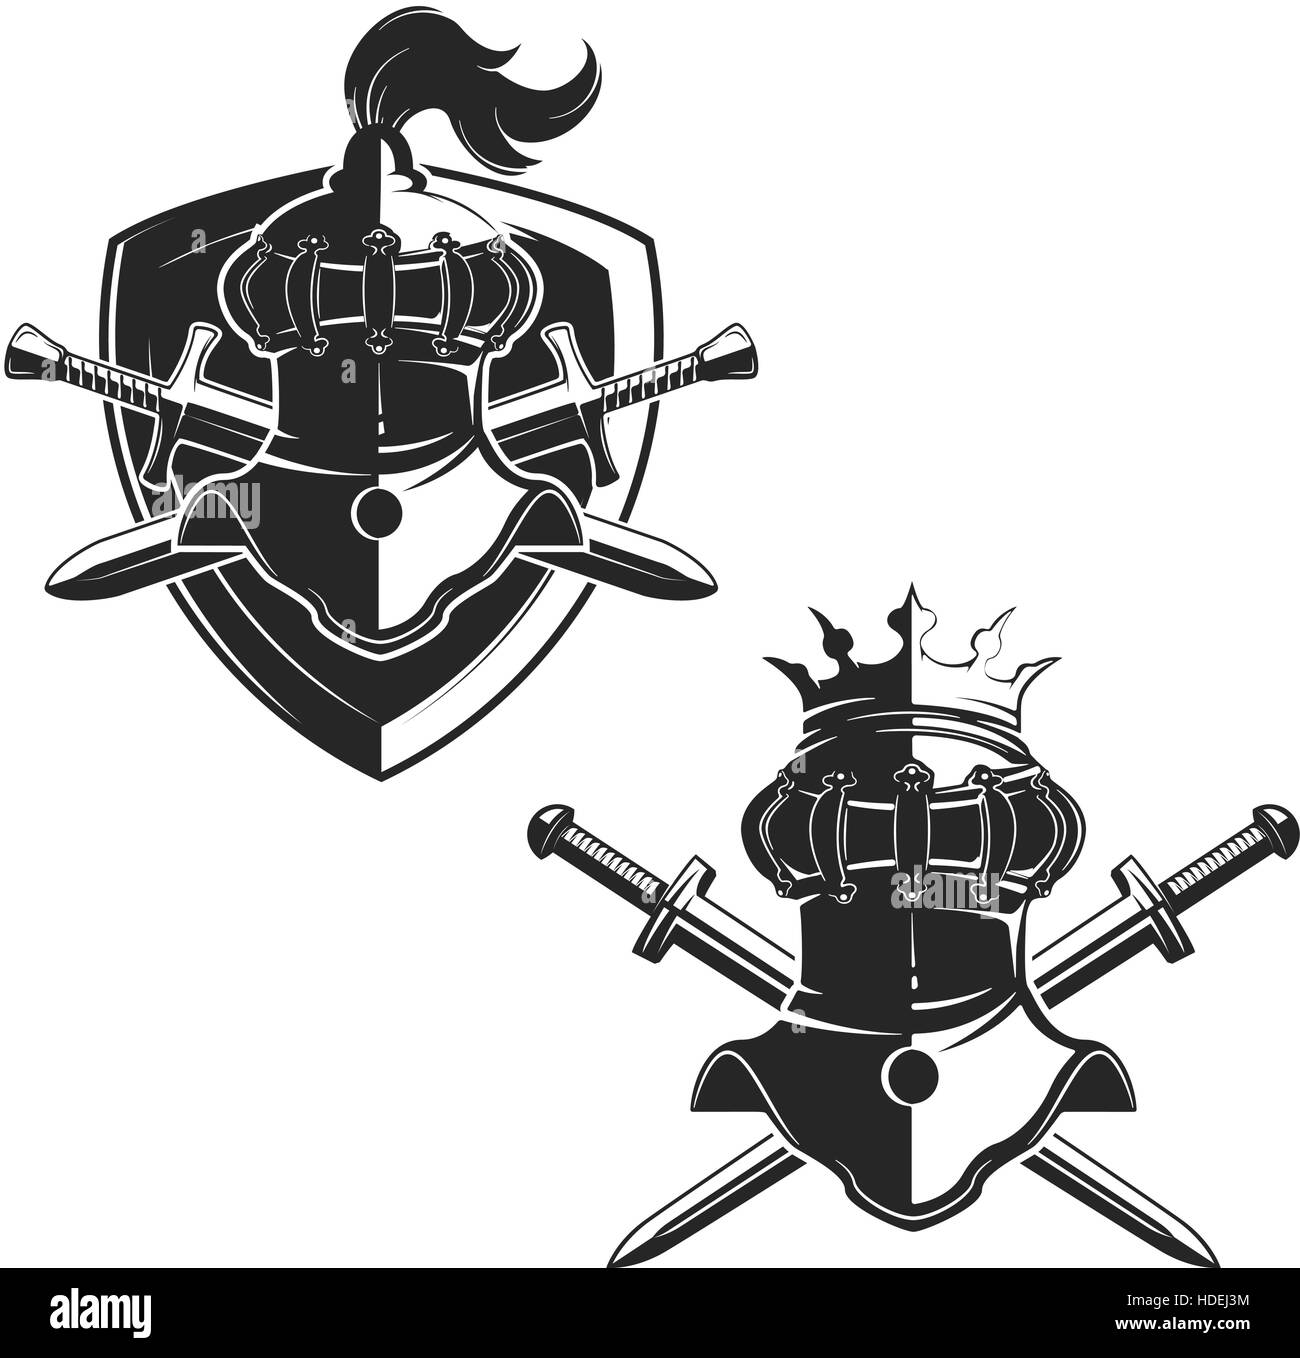 Set of the emblems templates with swords and knights helmets. Design elements for logo, label, emblem, sign, brand mark. Vector illustration. Stock Vector